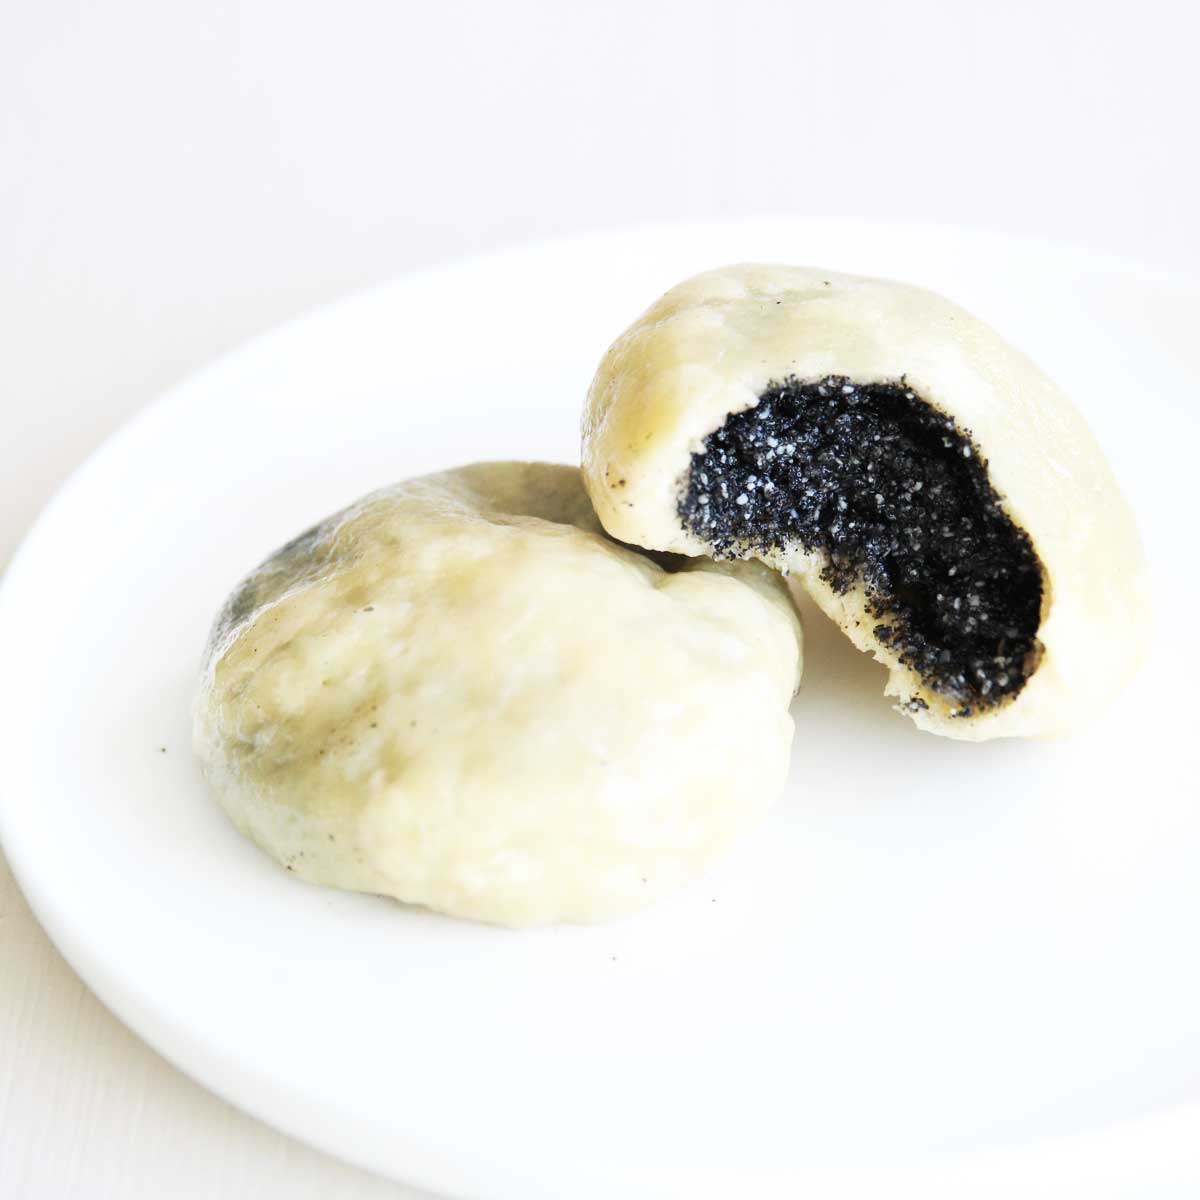 healthy sweet steamed bun filling ideas - black sesame paste